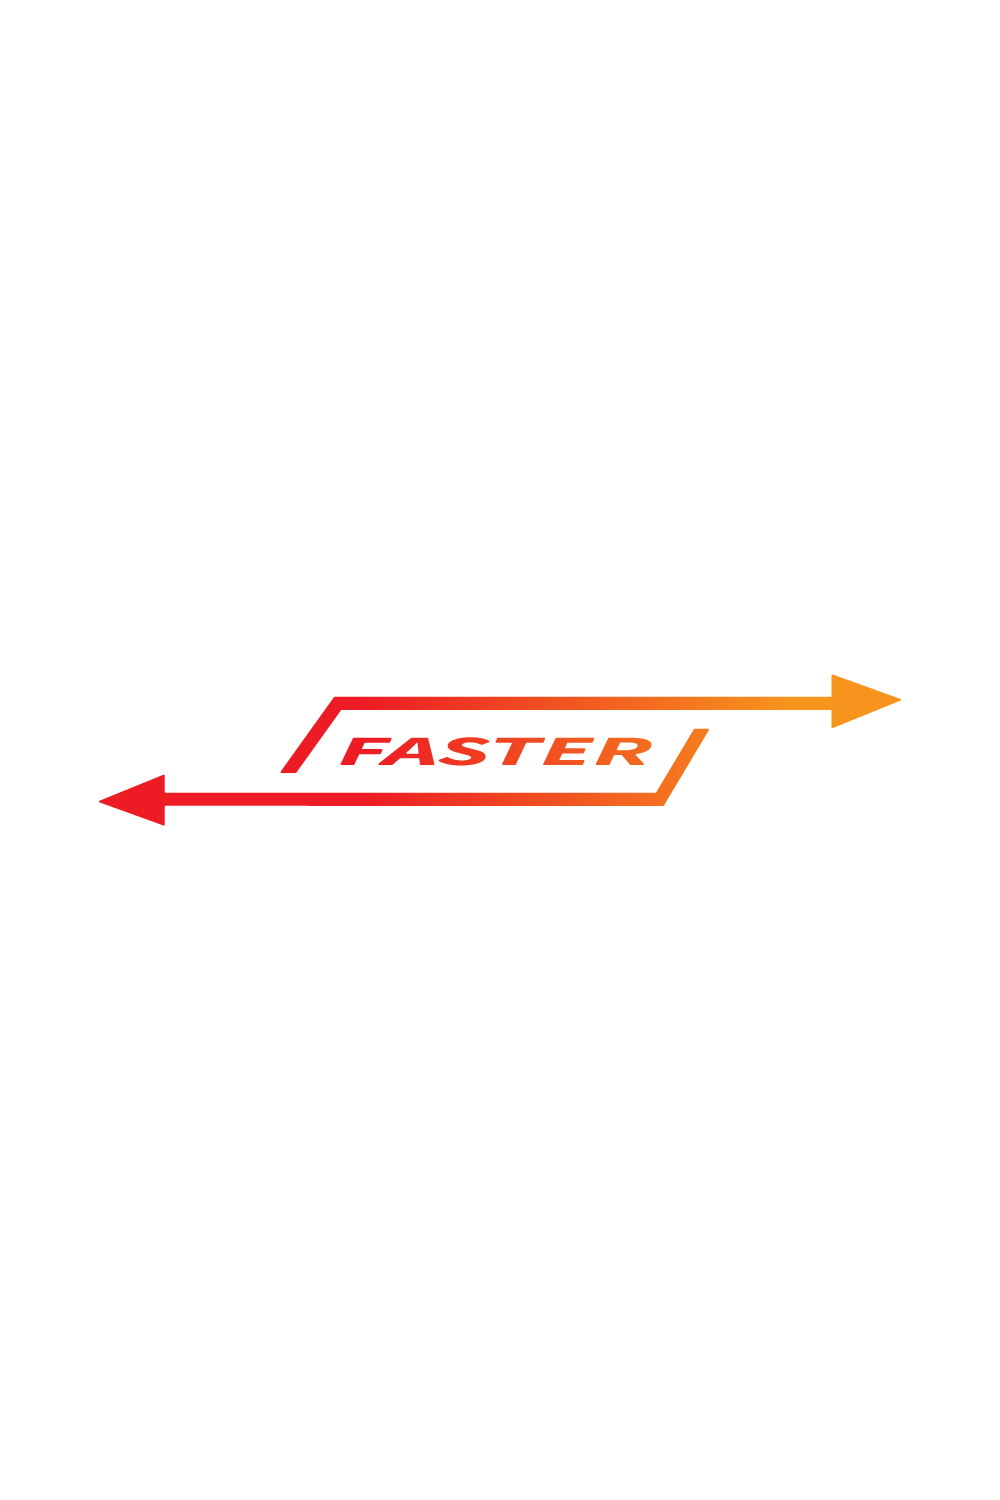 Faster Speed logo design HI speed logo design vector images Speed logo vector template arts Fast logo design monogram best identity pinterest preview image.